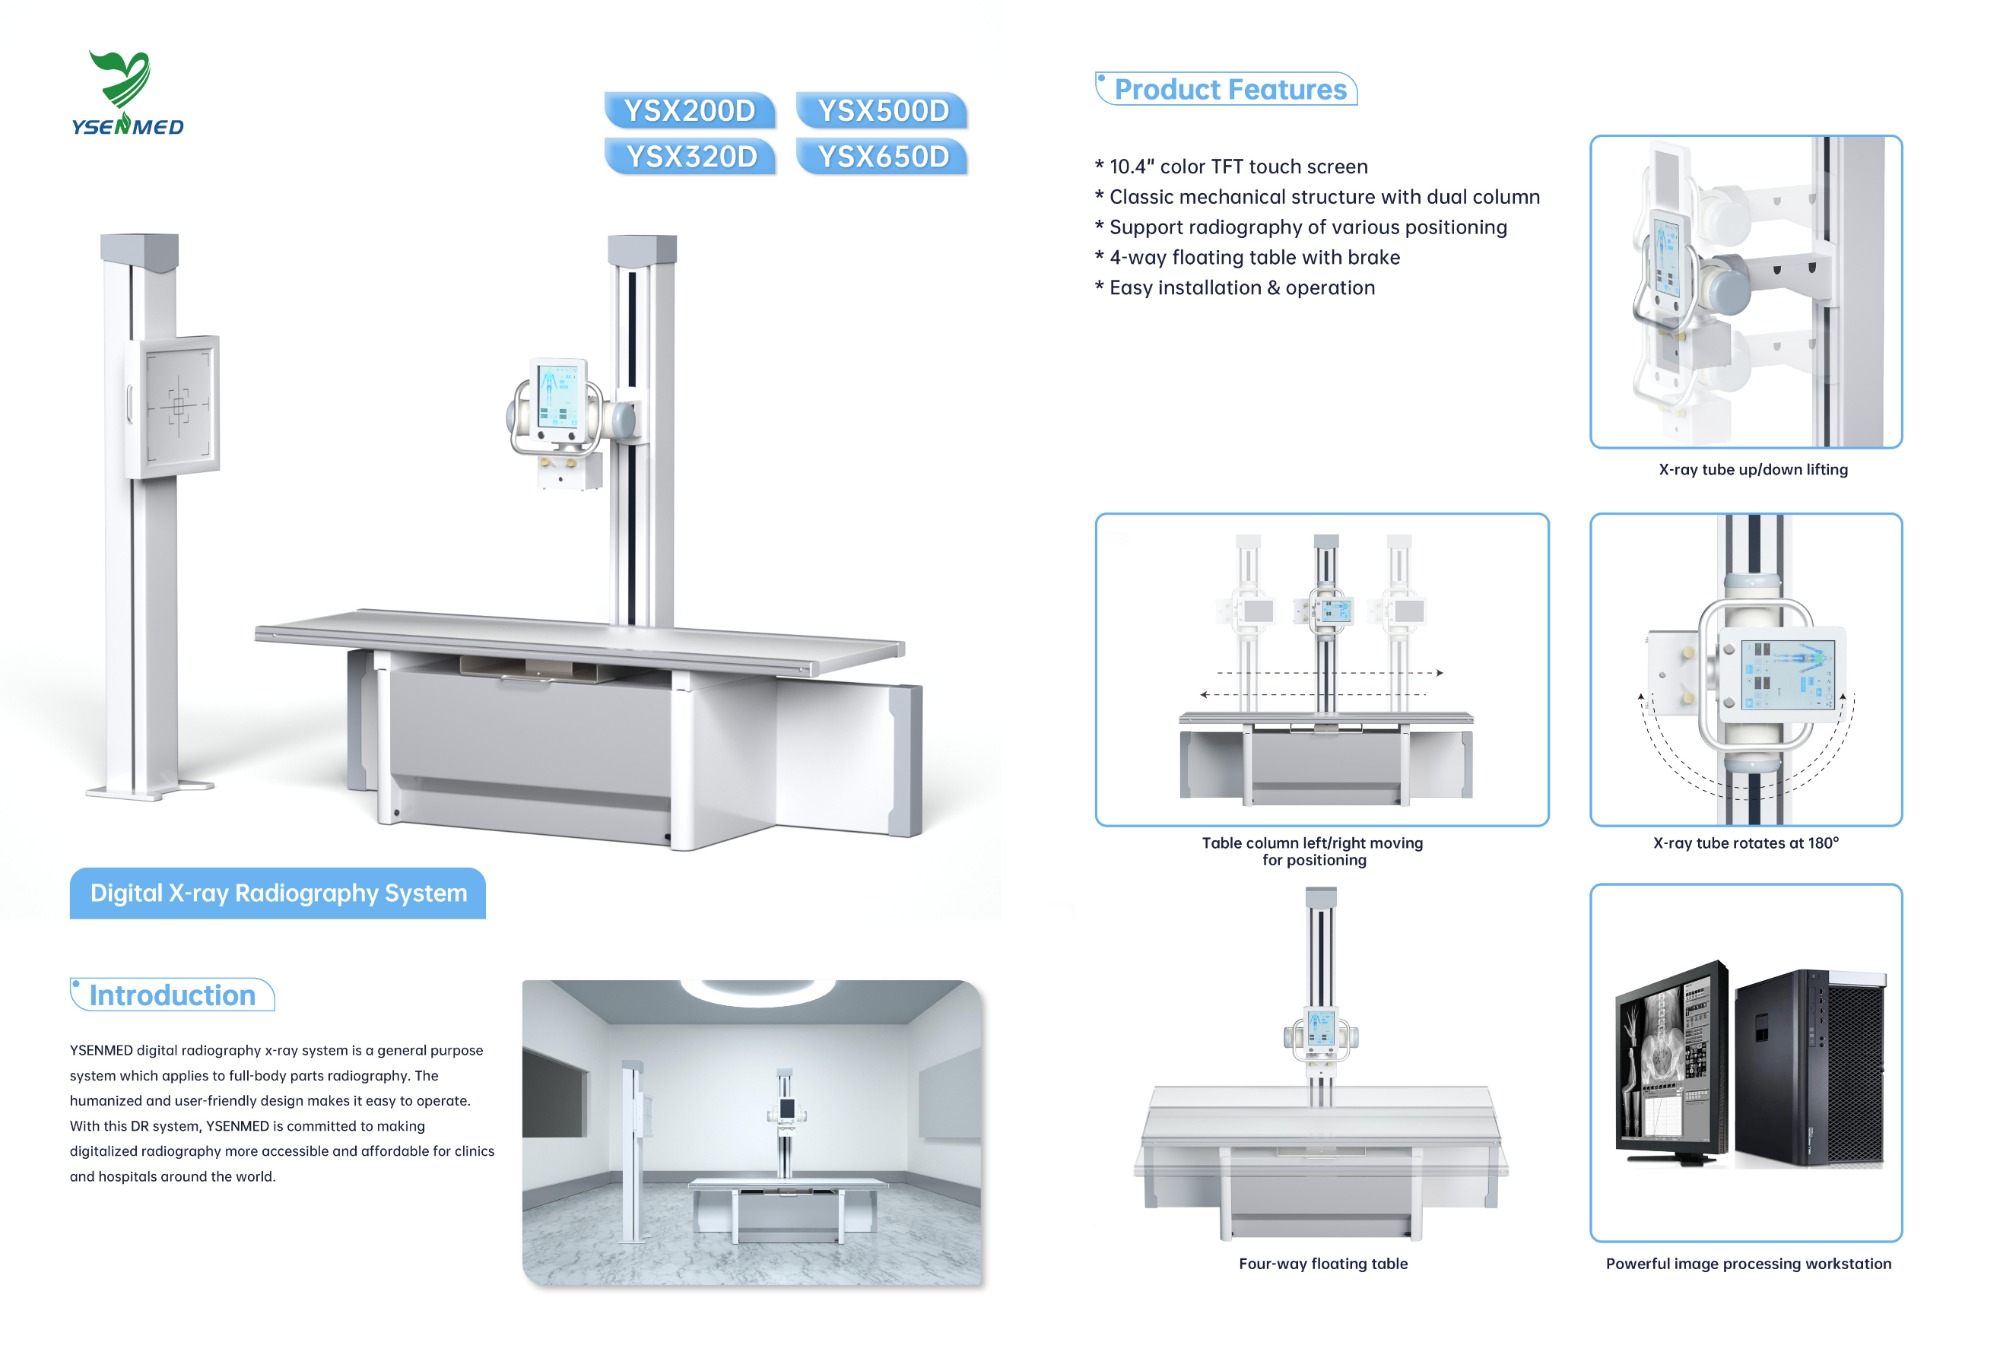 Latest Brochure/Catalog Of YSENMED YSX500D Digital X-ray System.